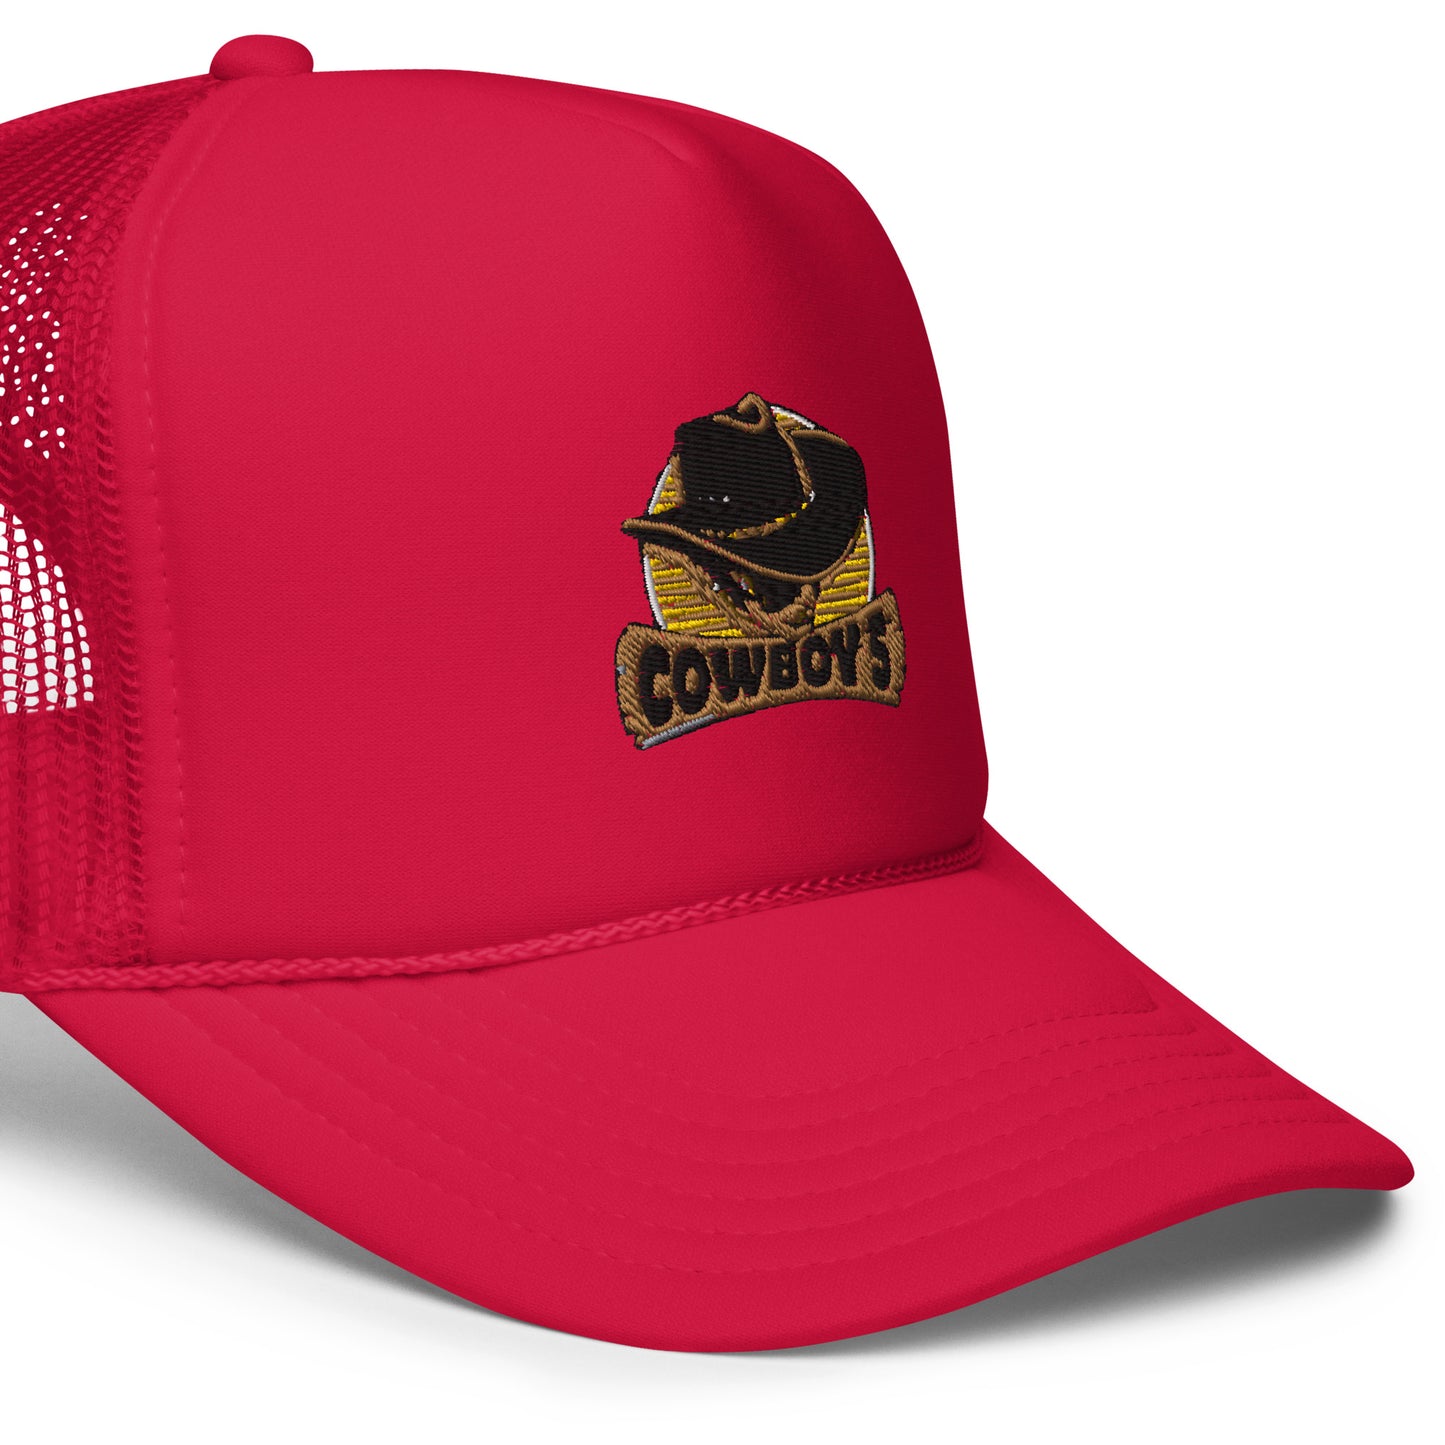 Cowboy5 Truckers hat